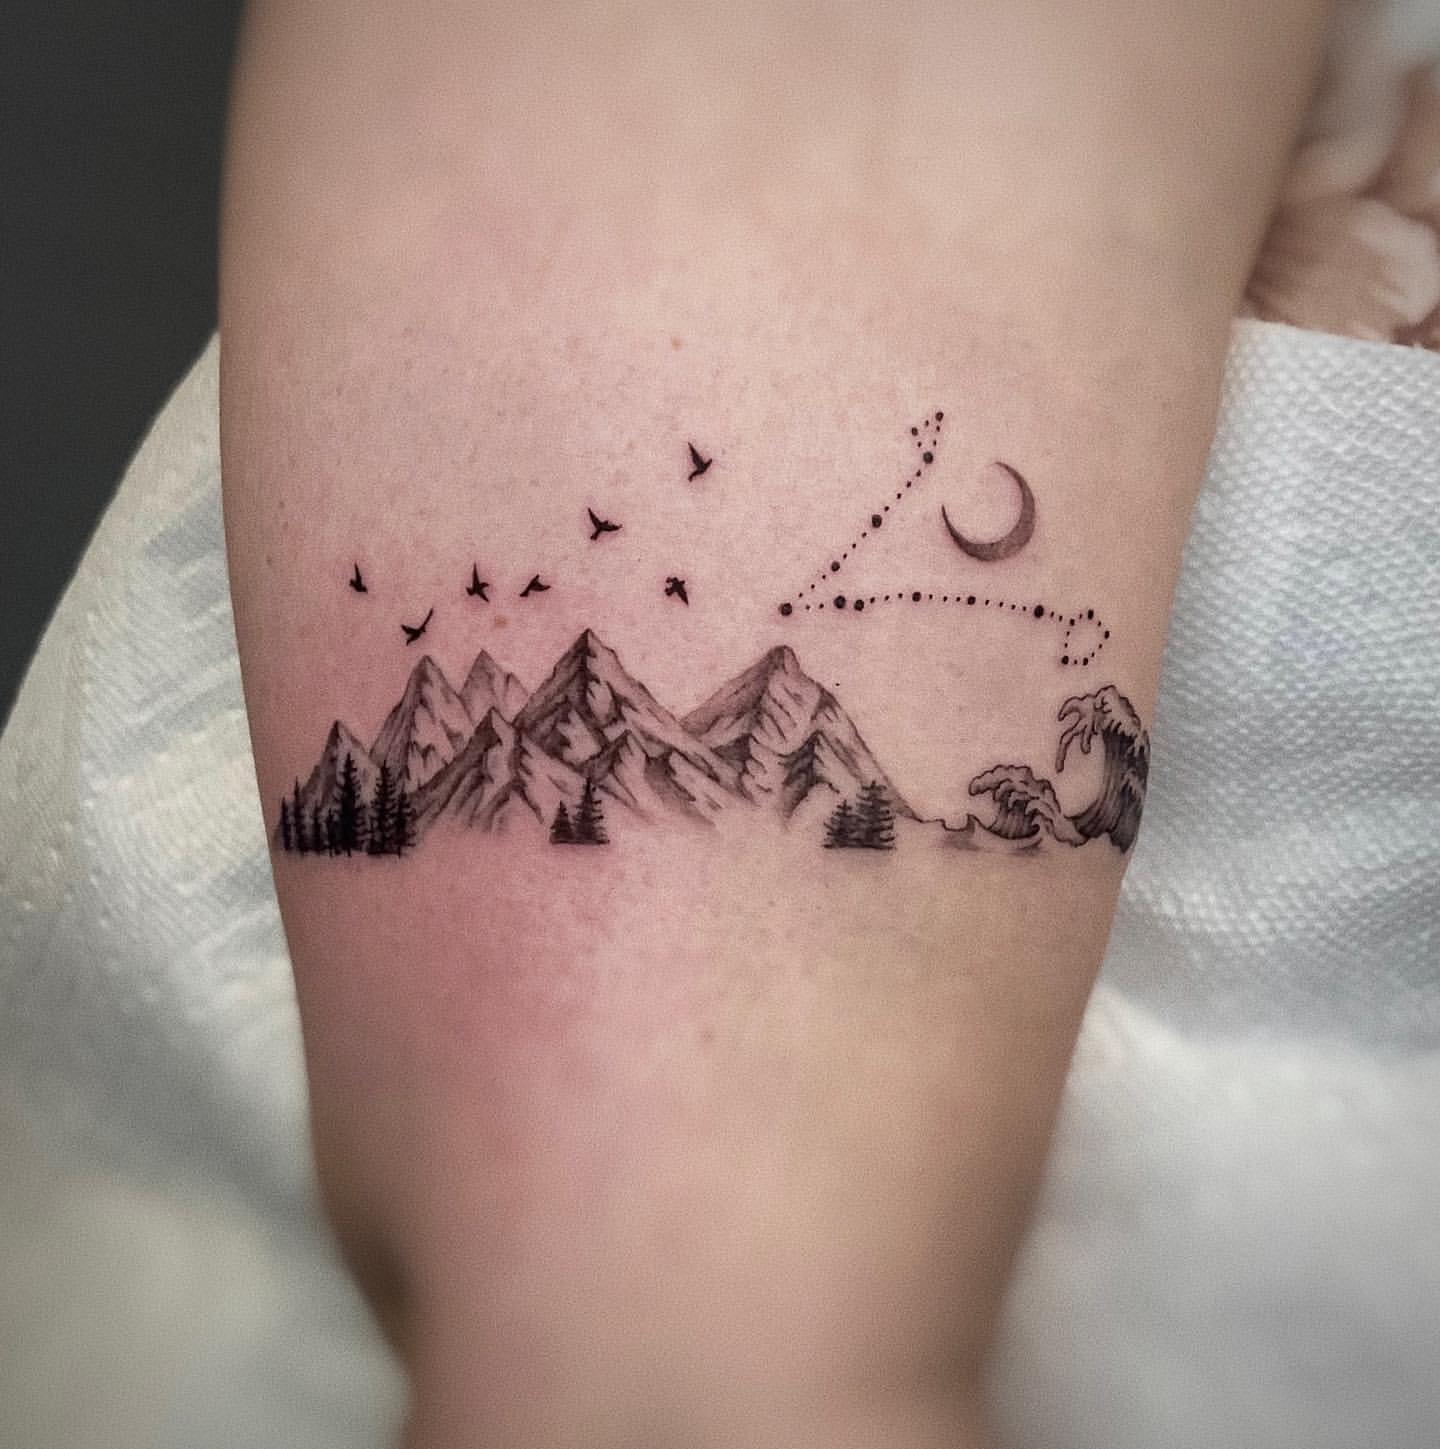 Rocky Mountains Tattoo - Best Tattoo Ideas Gallery